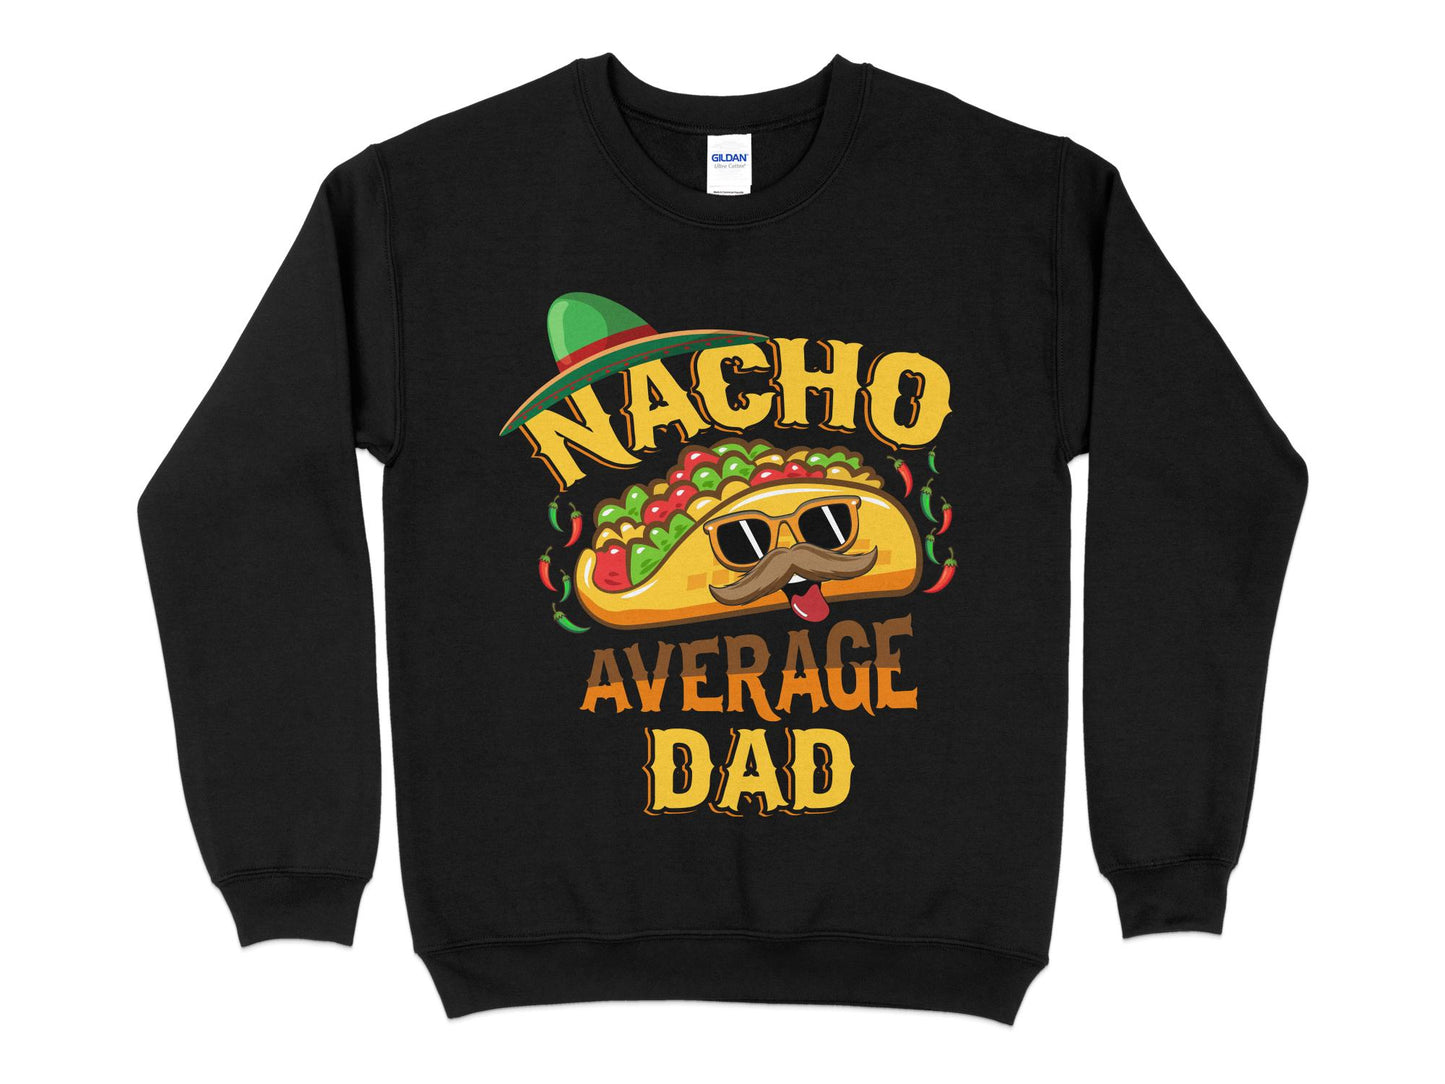 Nacho Average Dad Sweatshirt, black